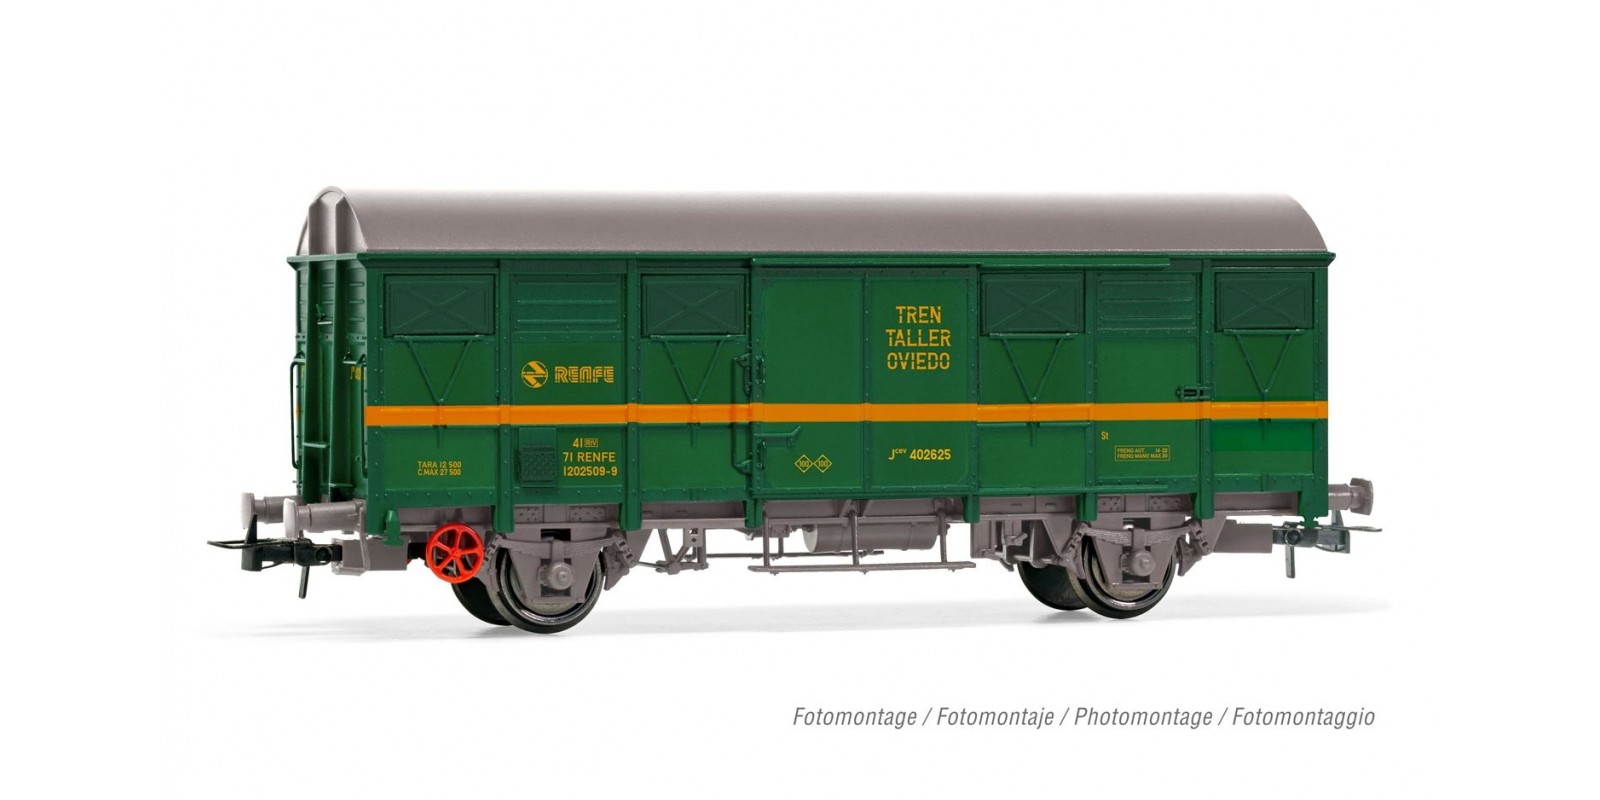 ET6018 RENFE, 2-axle wagon J2, green/yellow livery "tren taller Oviedo", period IV